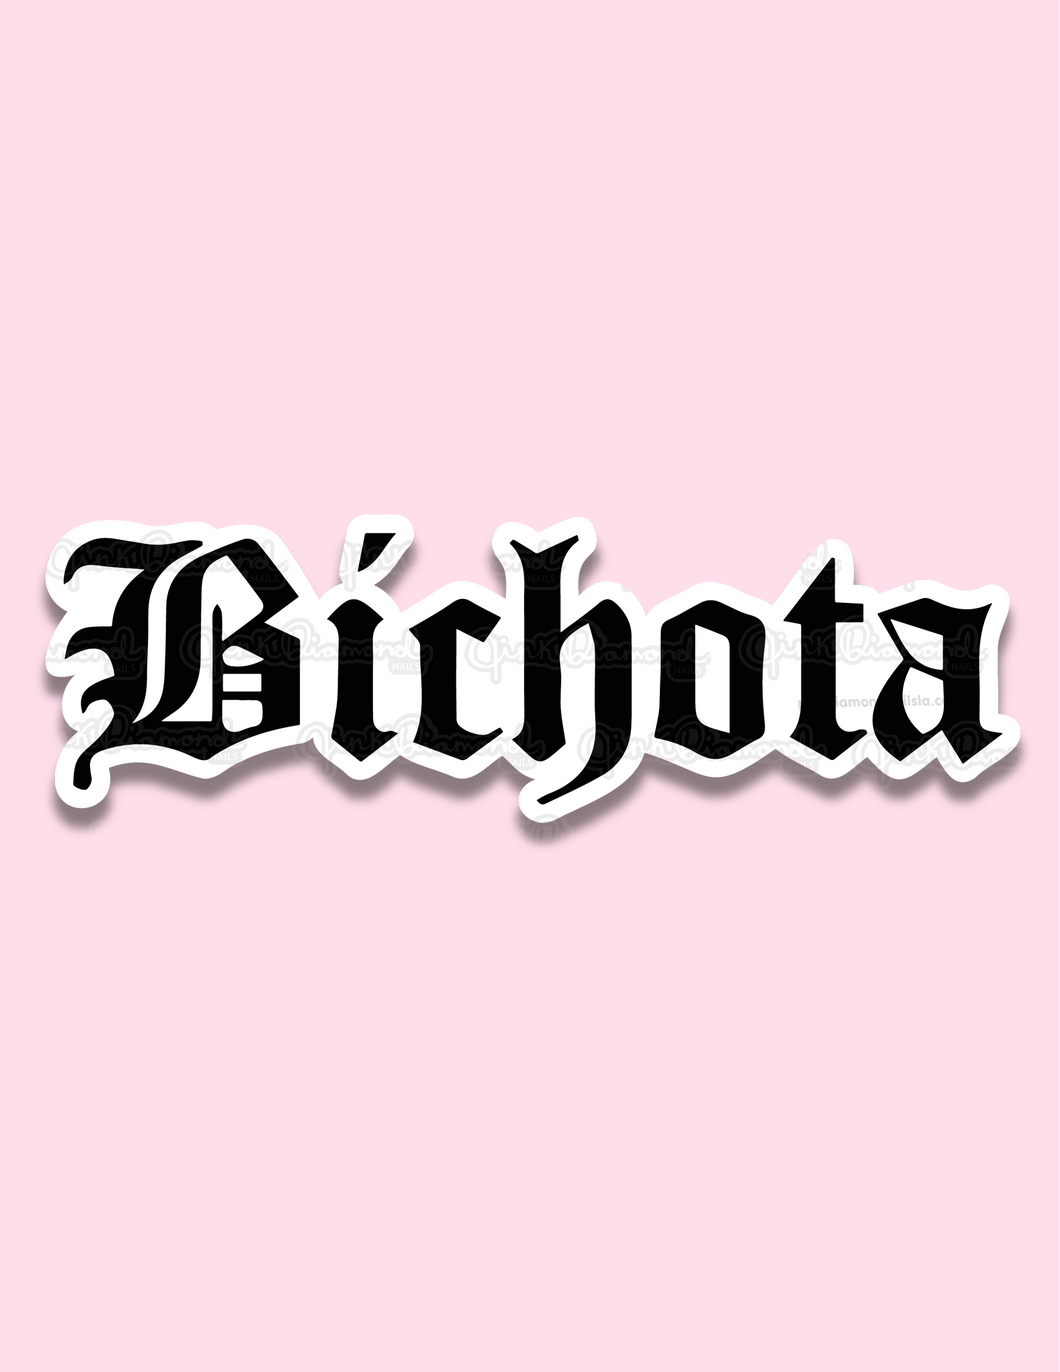 Bichota font - Vinyl sticker